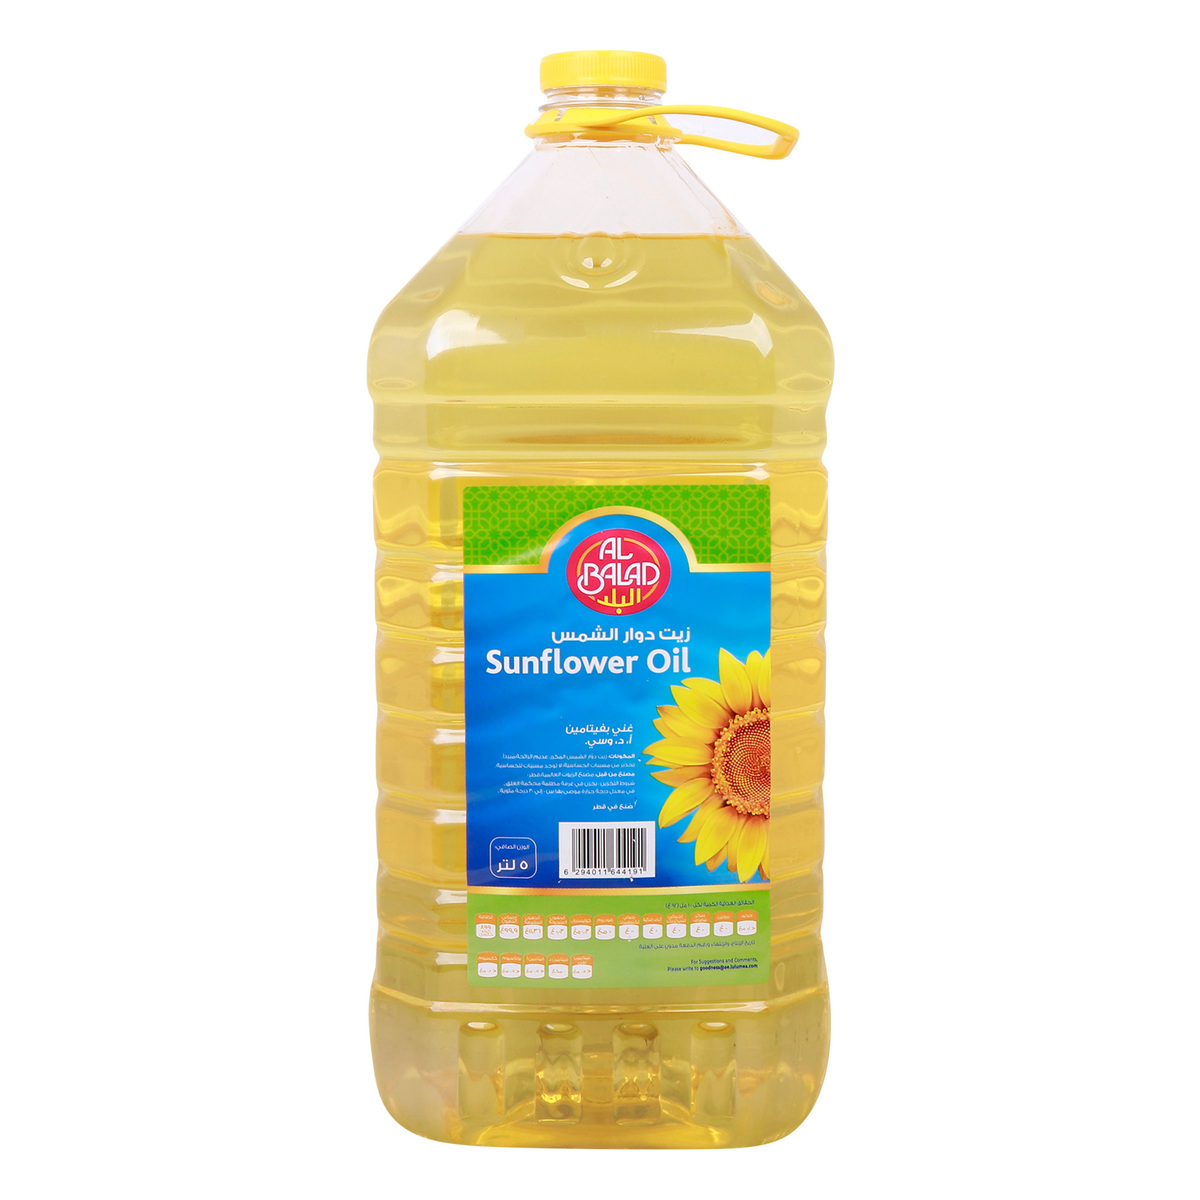 Al Balad Sunflower Oil, 5 Litre